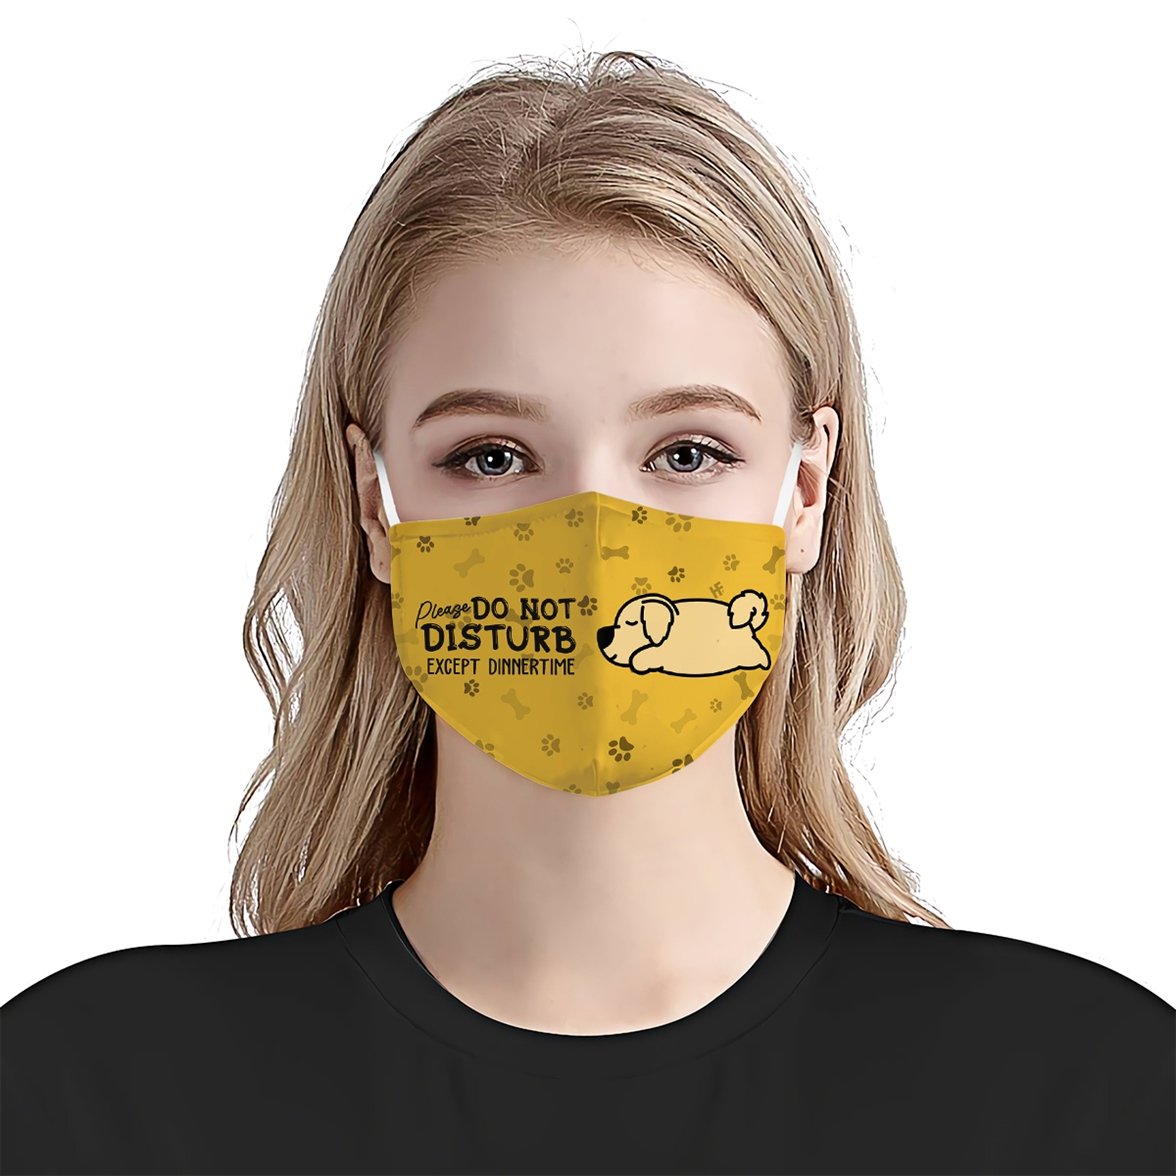 Please Do Not Disturb Except Dinnertime Golden Yellow EZ16 0807 Face Mask